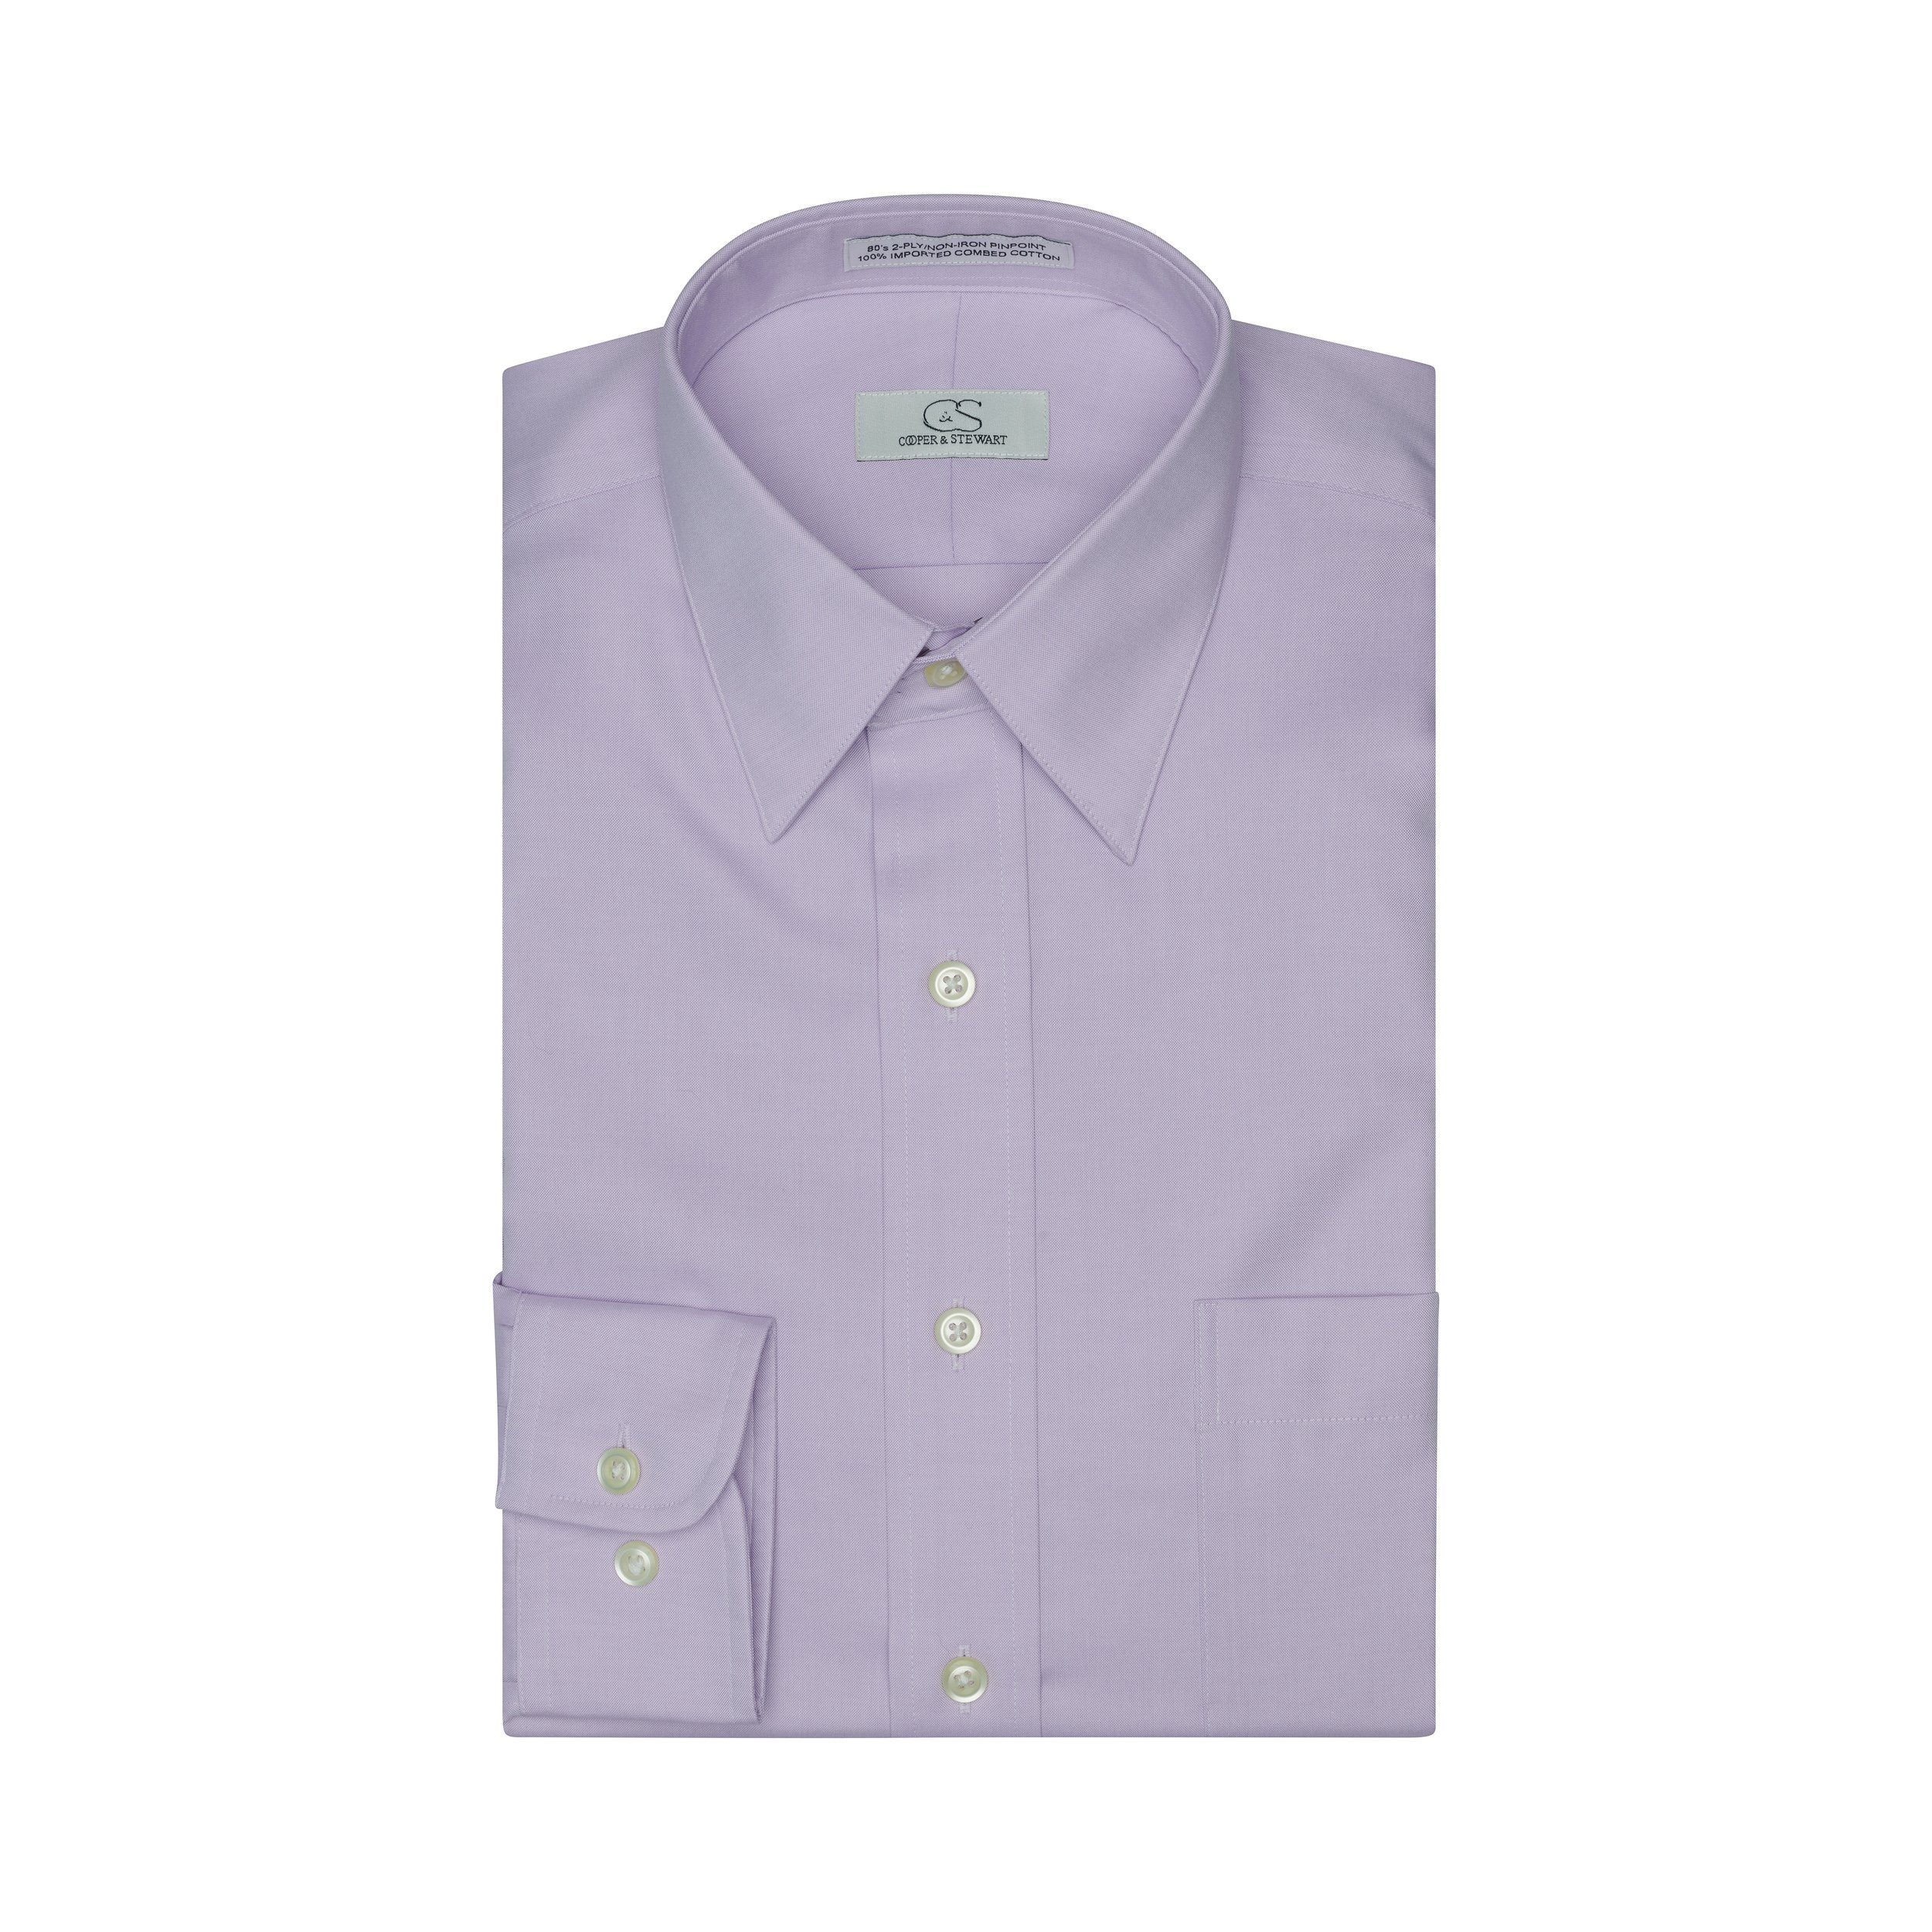 038-Lavender-Spread Collar-Tailor Fit Best Dress Shirt 